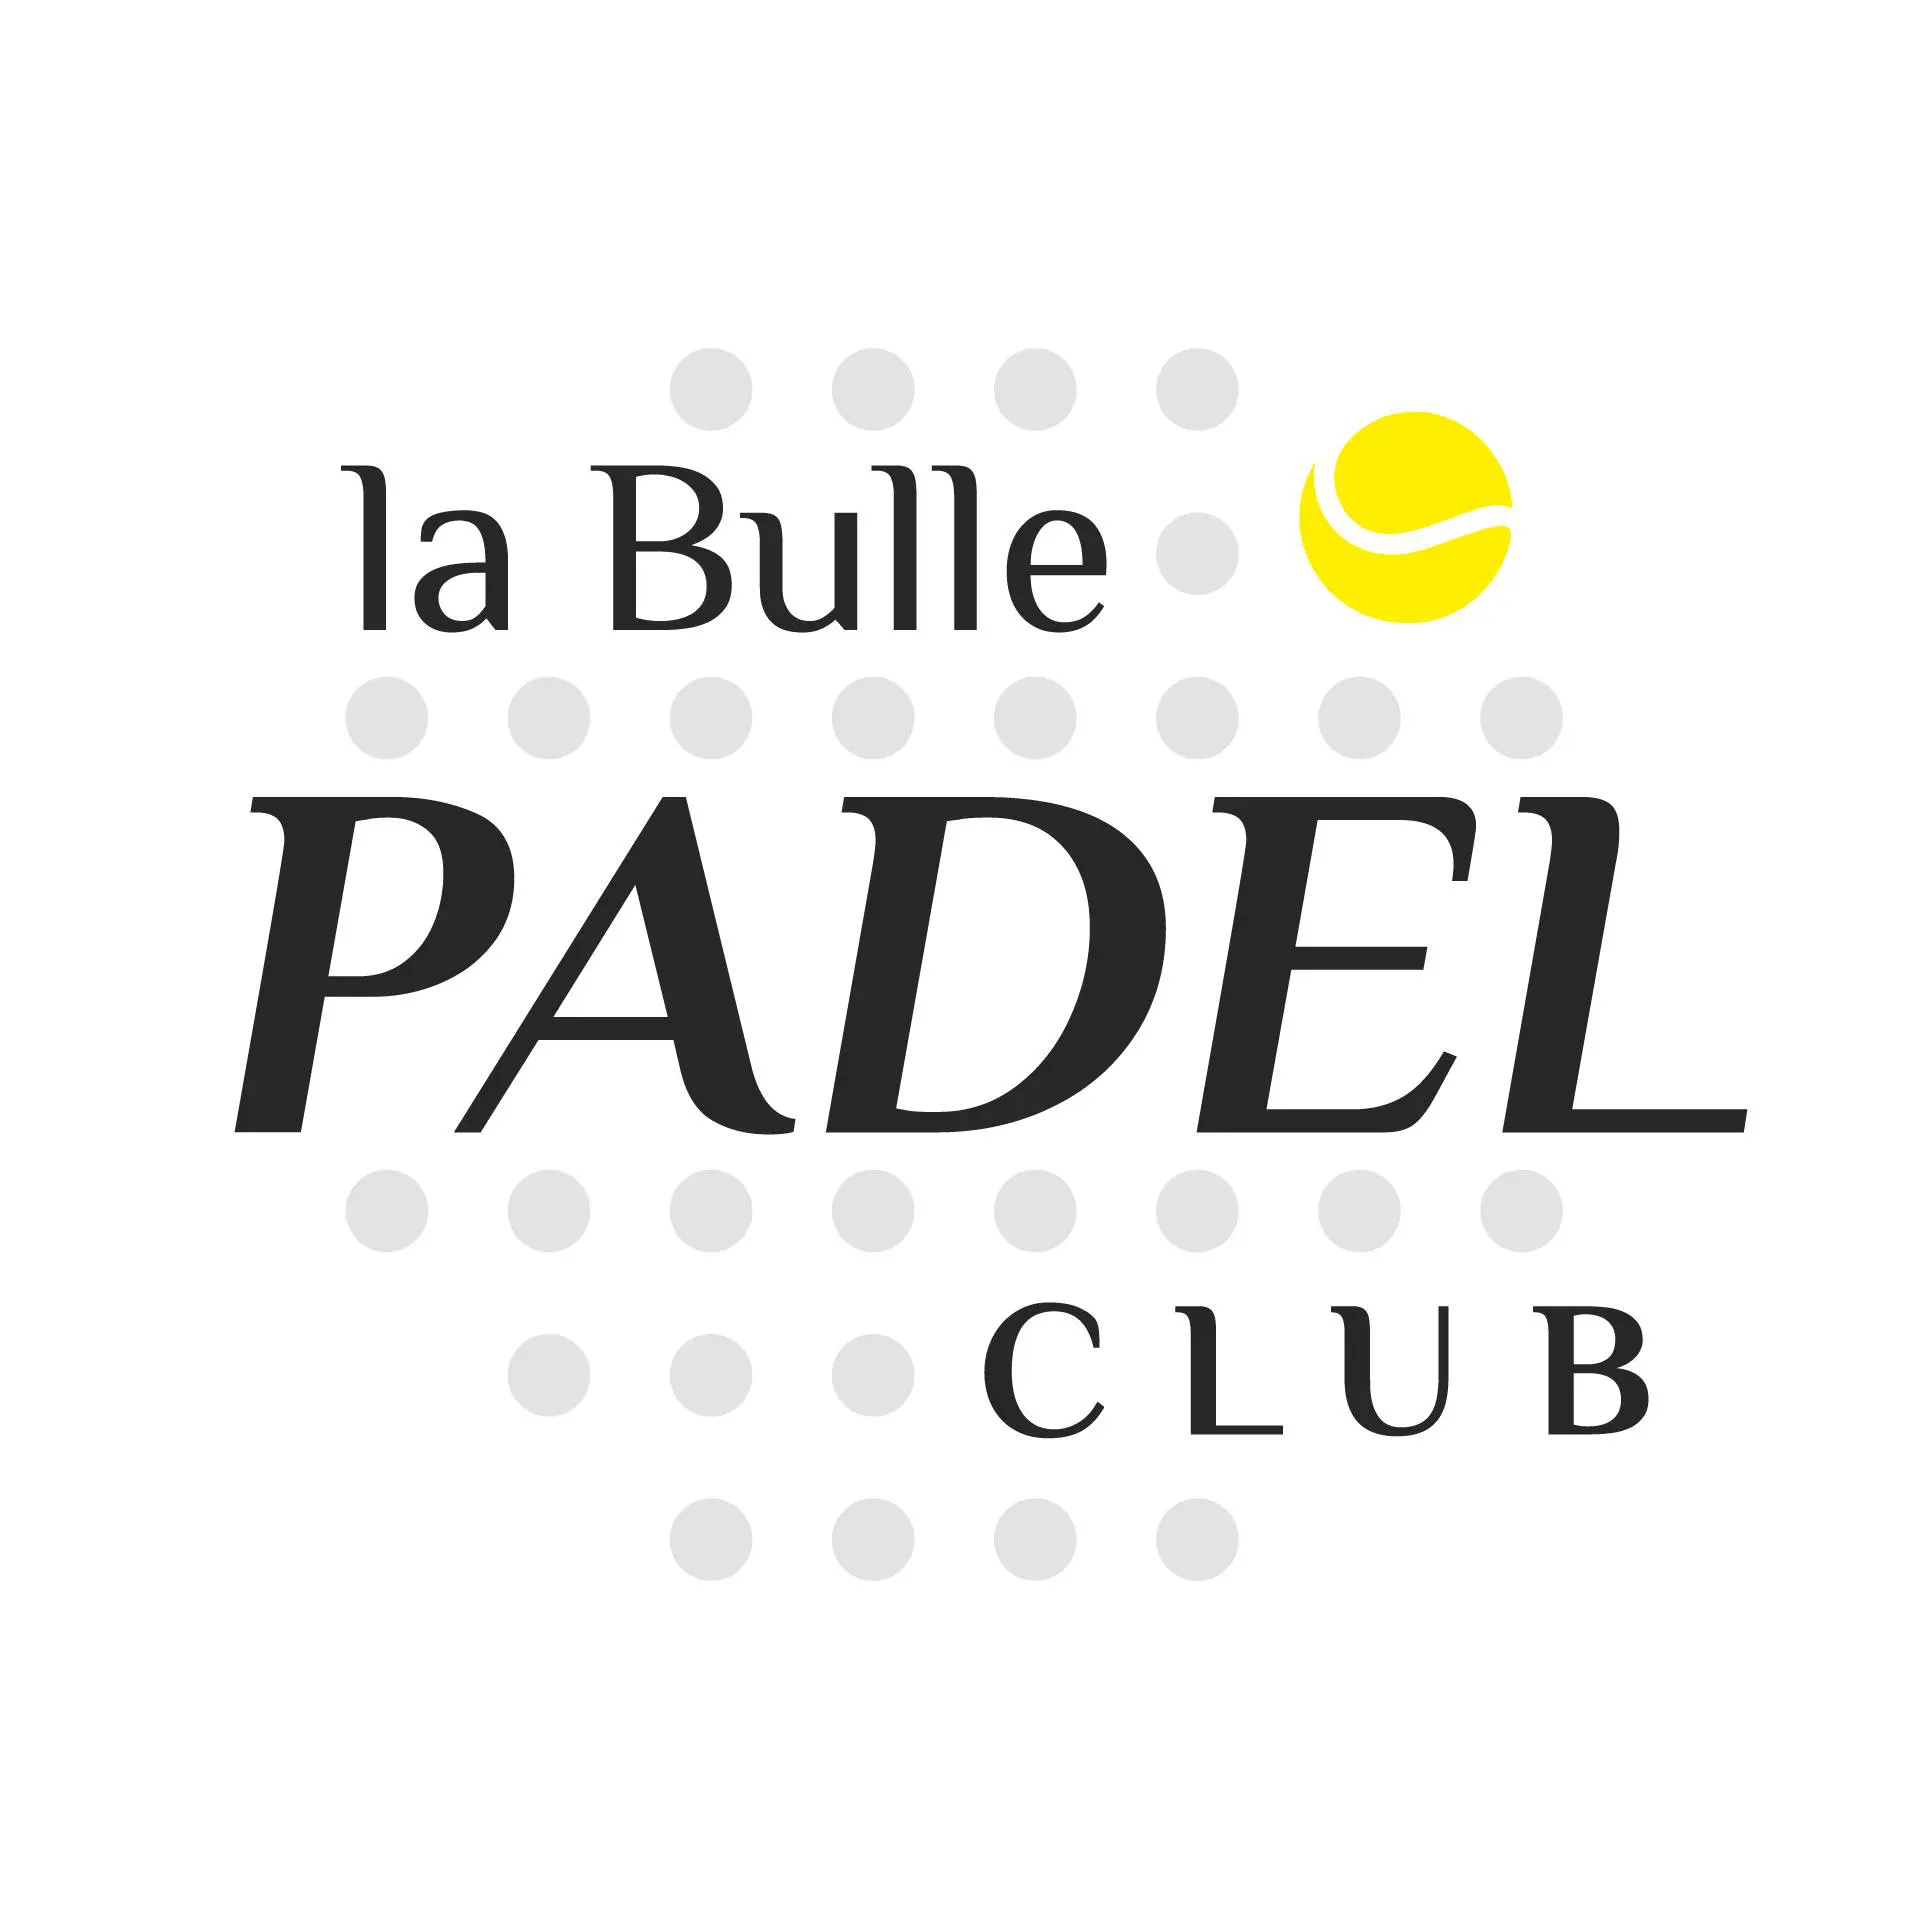 La Bulle Padel Club